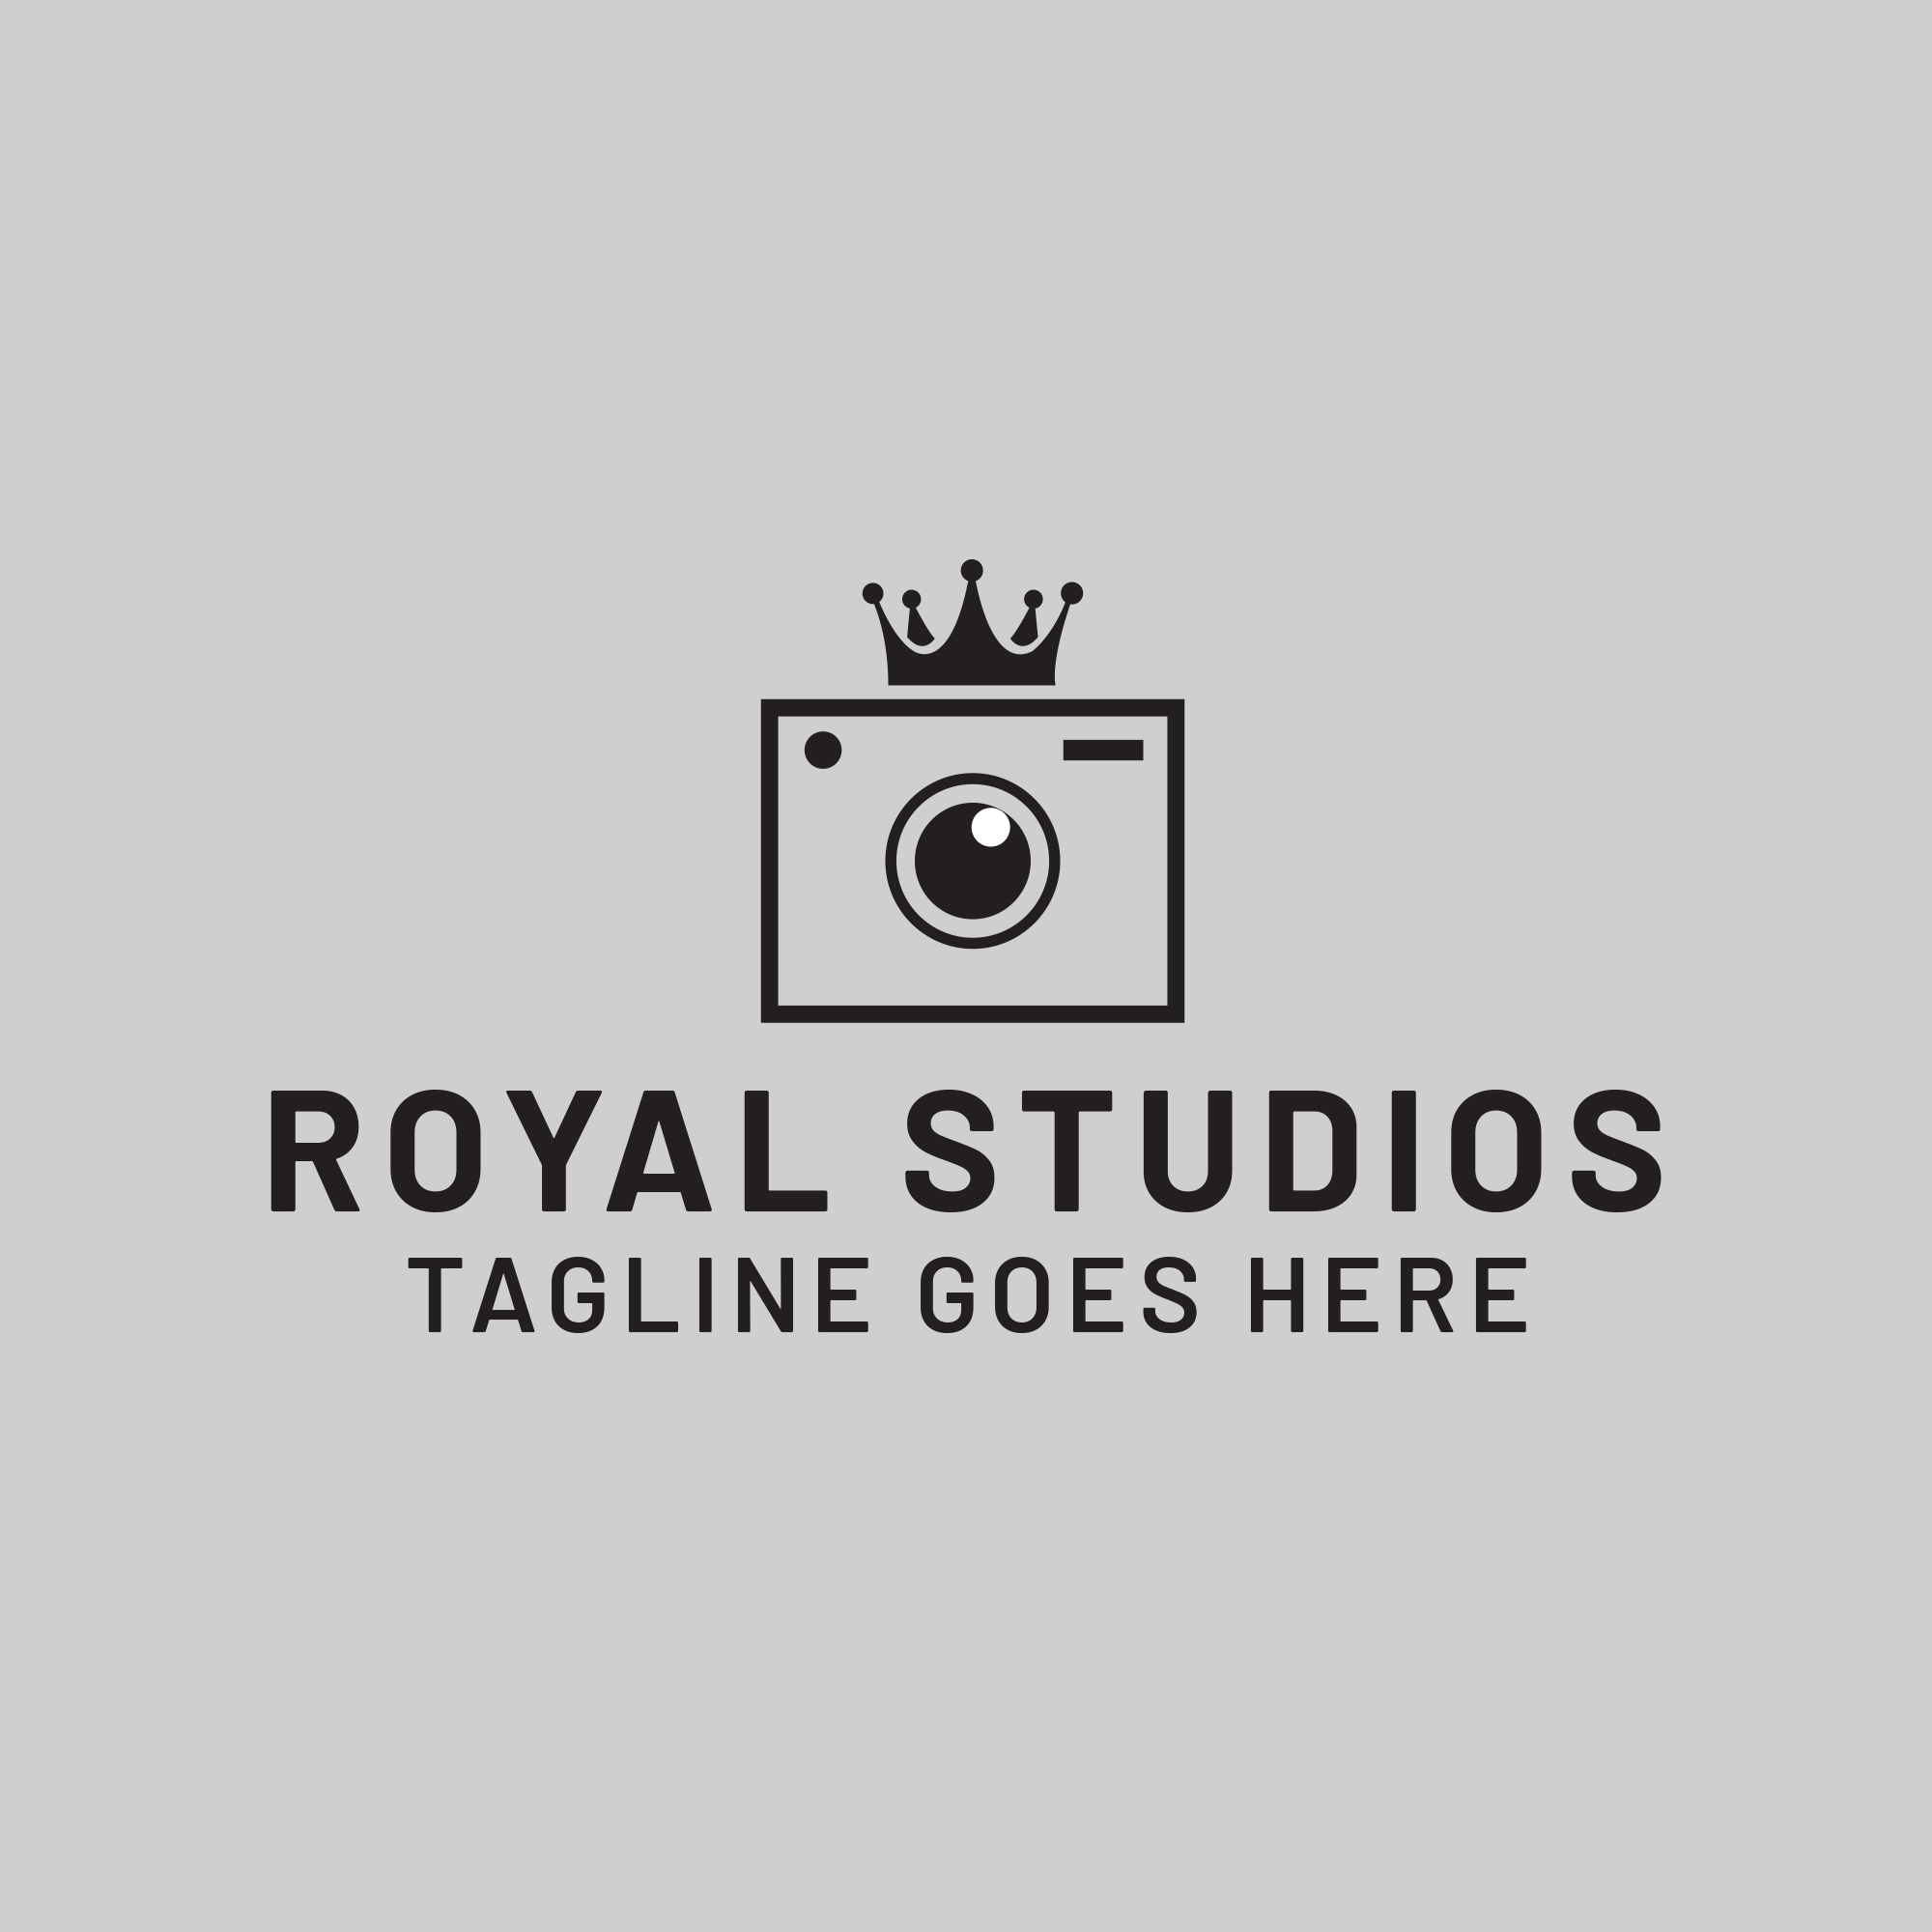 Camera Logo Template Or Royal Studio image preview.